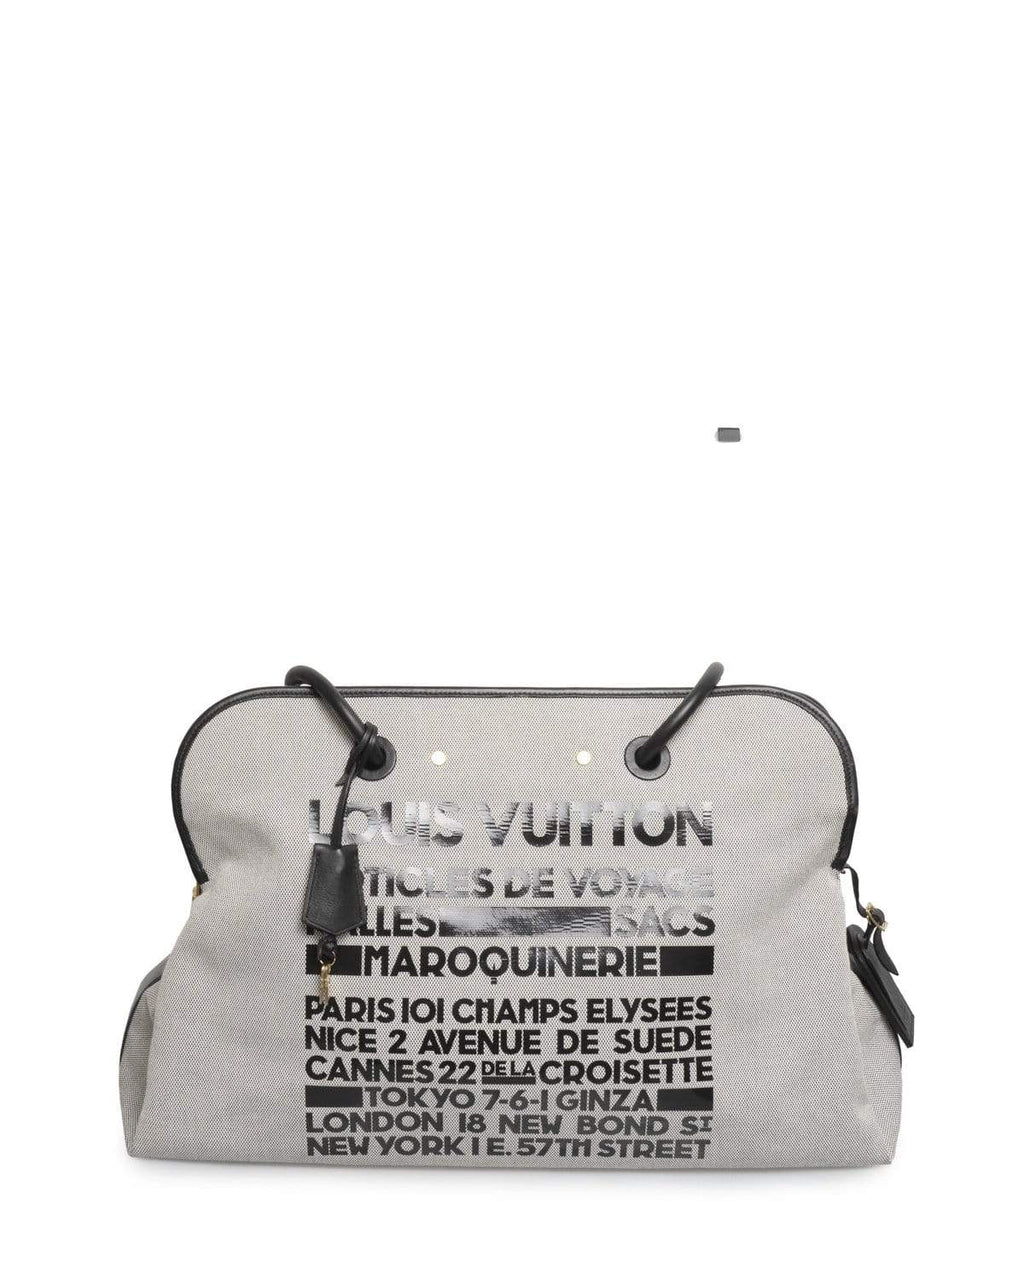 Louis Vuitton Articles de Voyage Malles Handbag Canvas Gray 4150719